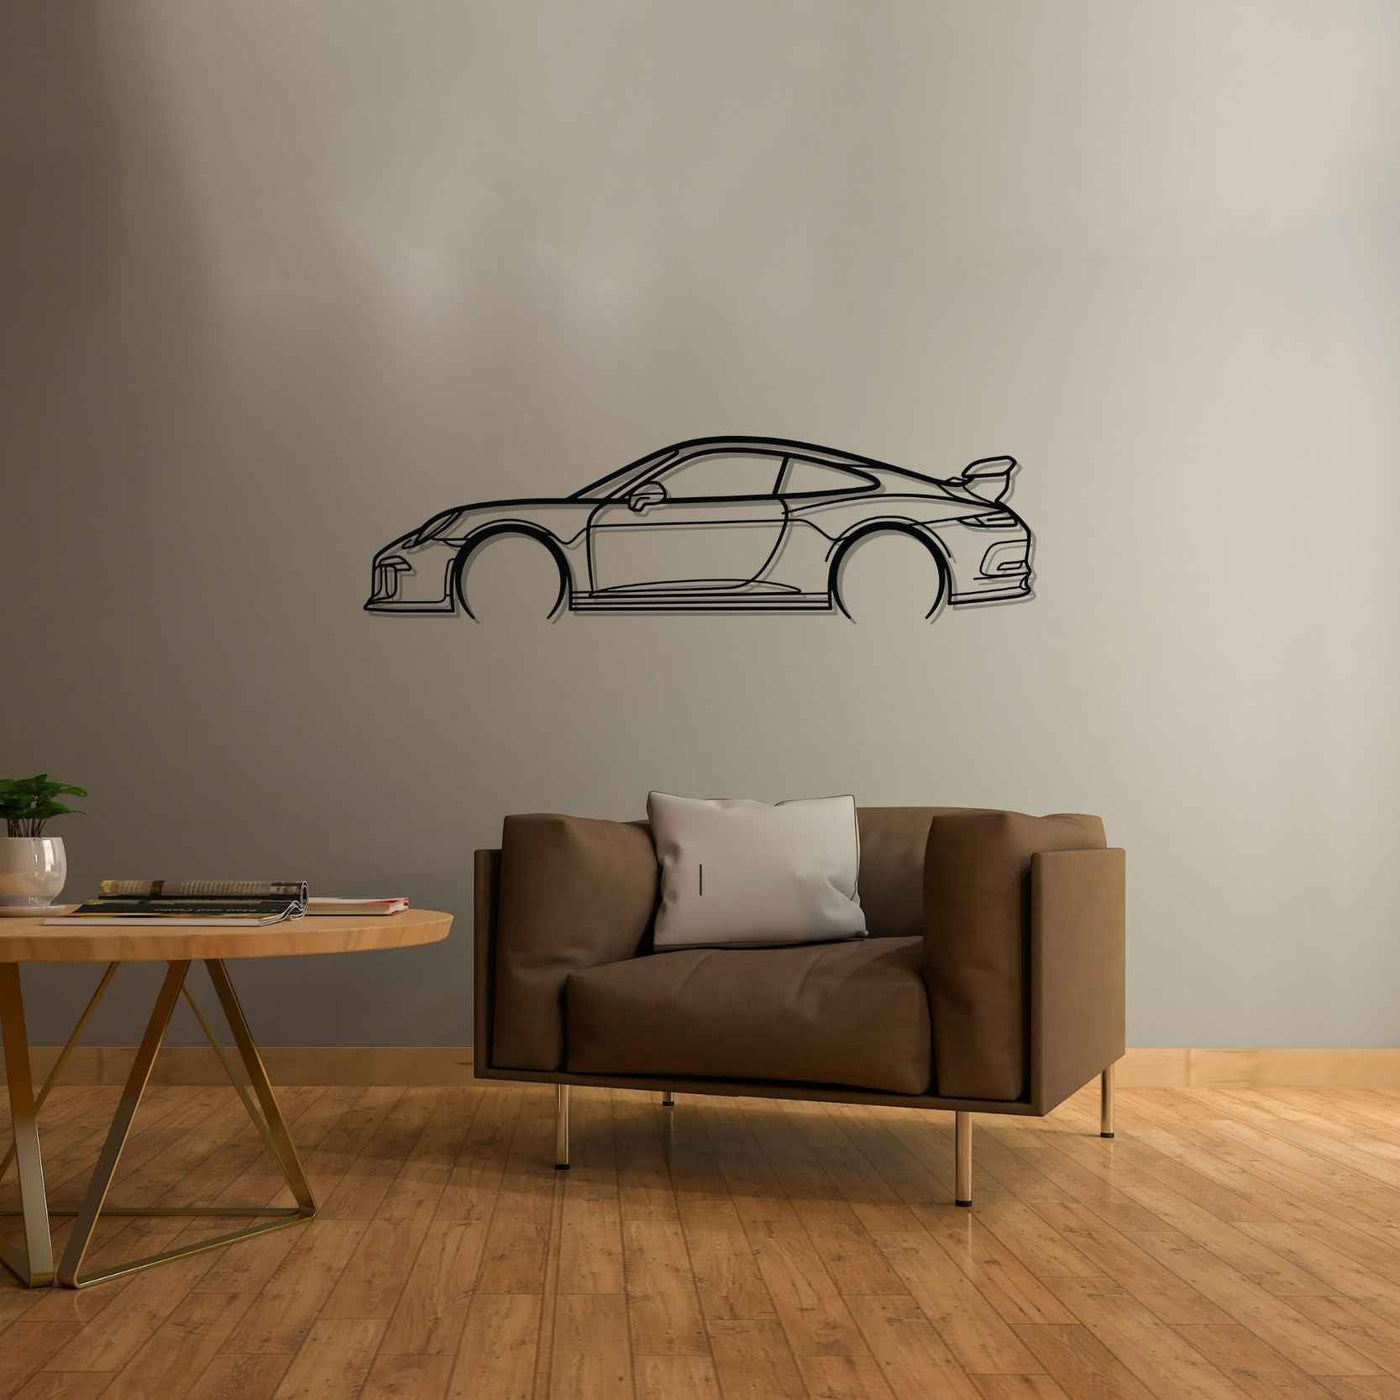 911 GT3 model 991 Detailed Silhouette Metal Wall Art